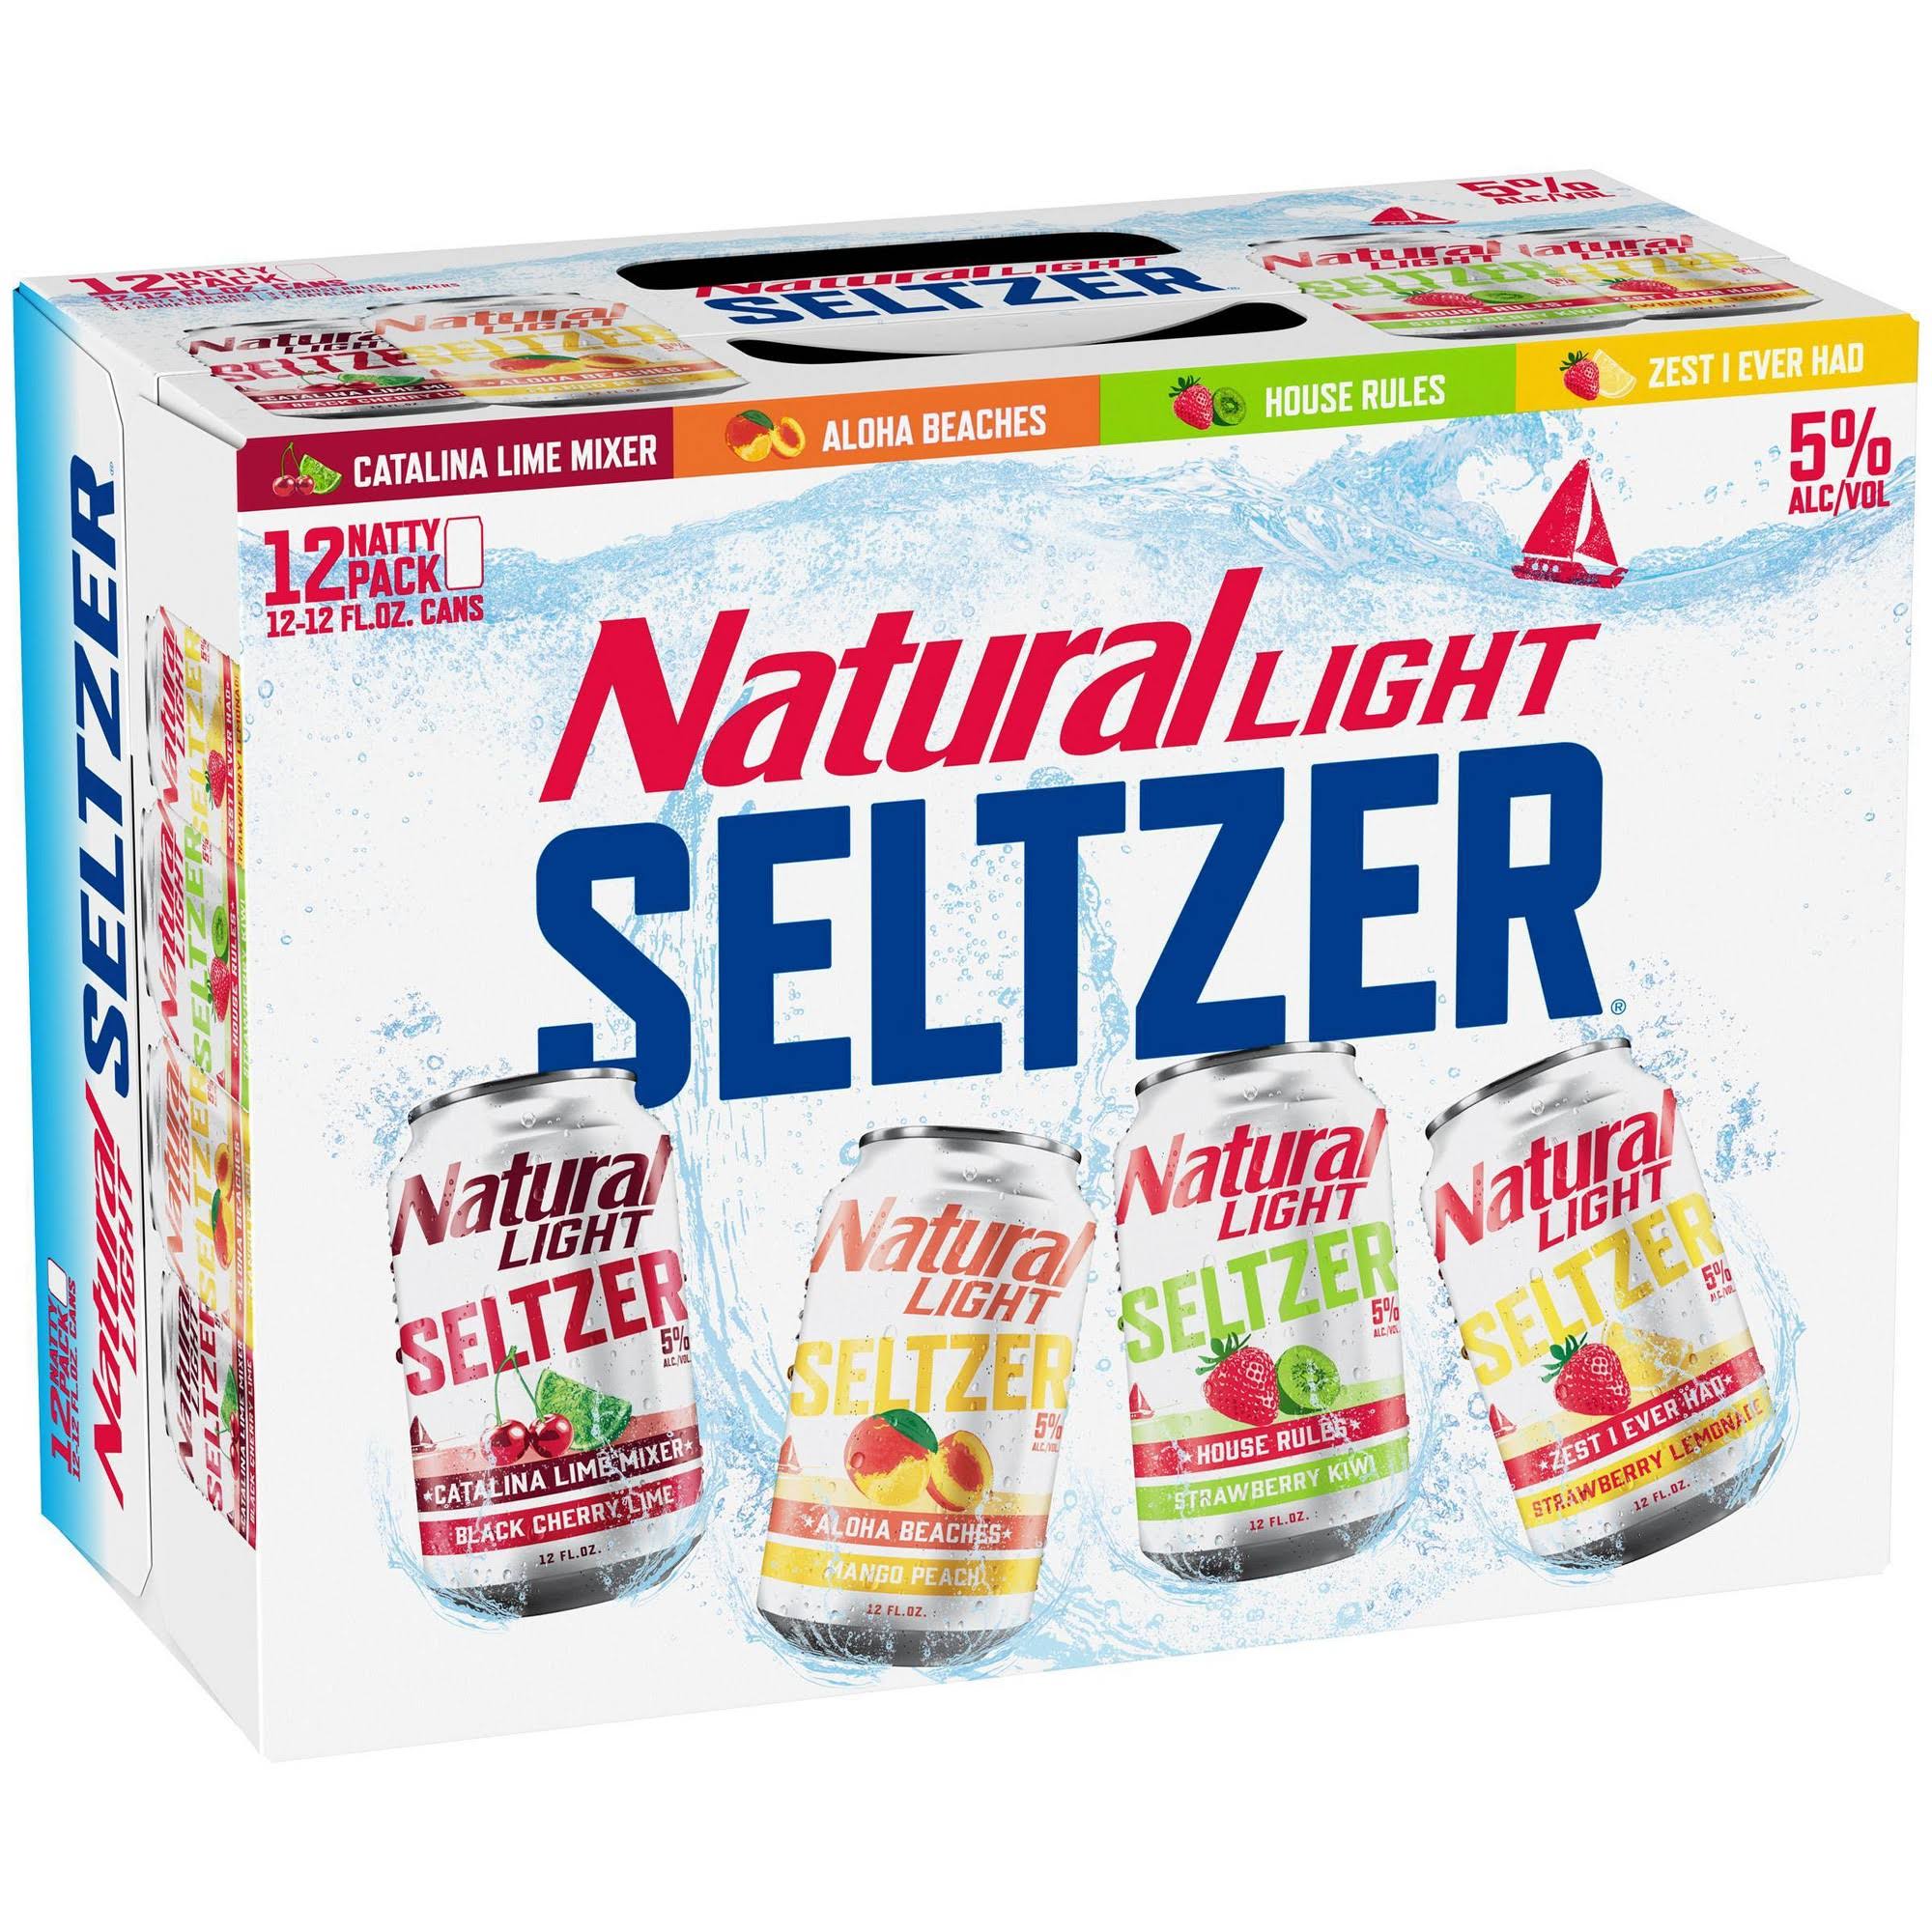 Natural Light Seltzer, Variety Pack, 12 Natty Pack - 12 pack, 12 fl oz cans